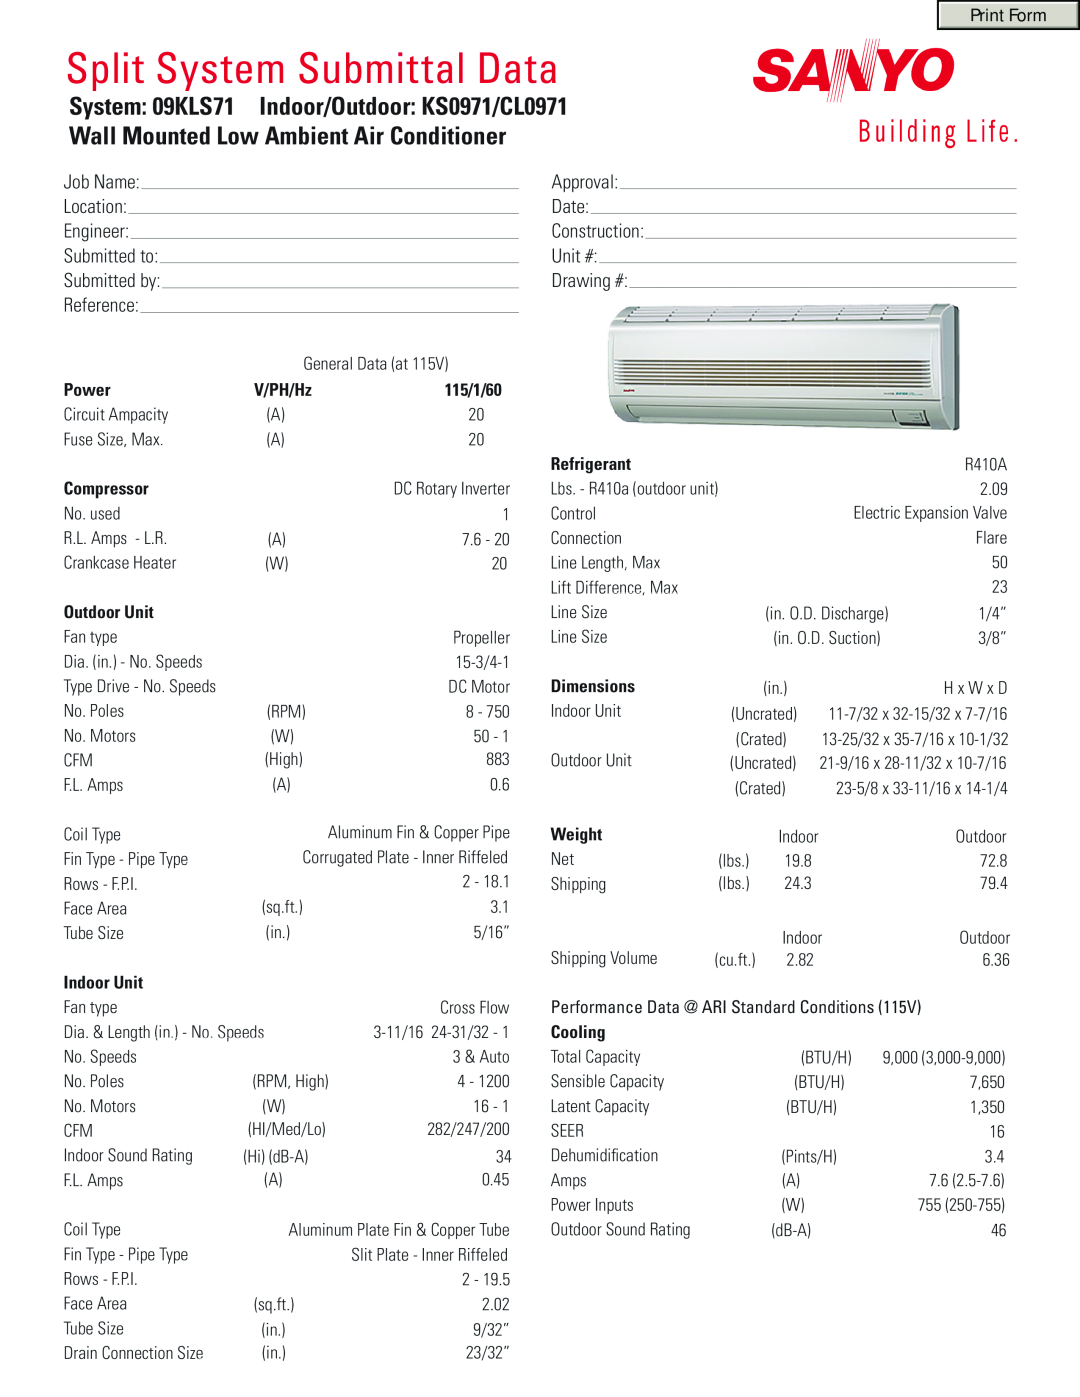 Sanyo 09KLS71 dimensions Power, 115/1/60, Compressor, Outdoor Unit, Indoor Unit, Refrigerant, Dimensions, Weight, Cooling 